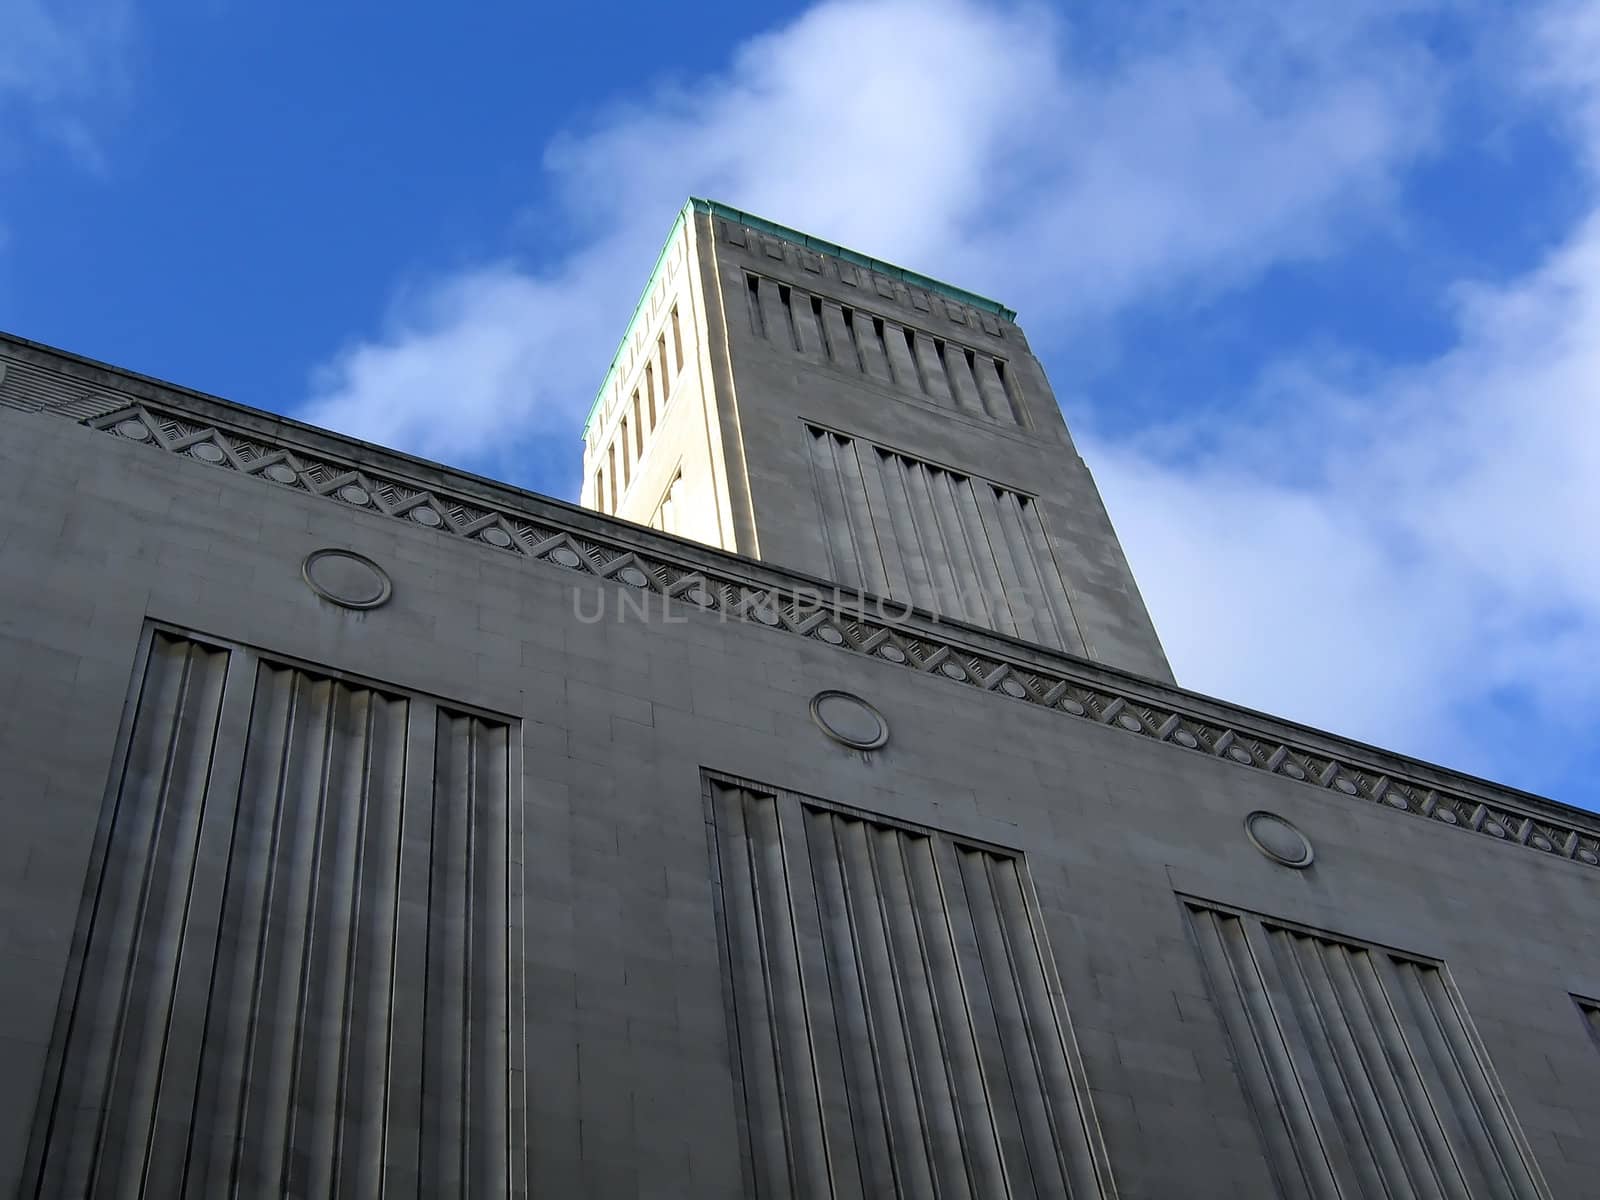 Historic Ventilation Building in Liverpool England